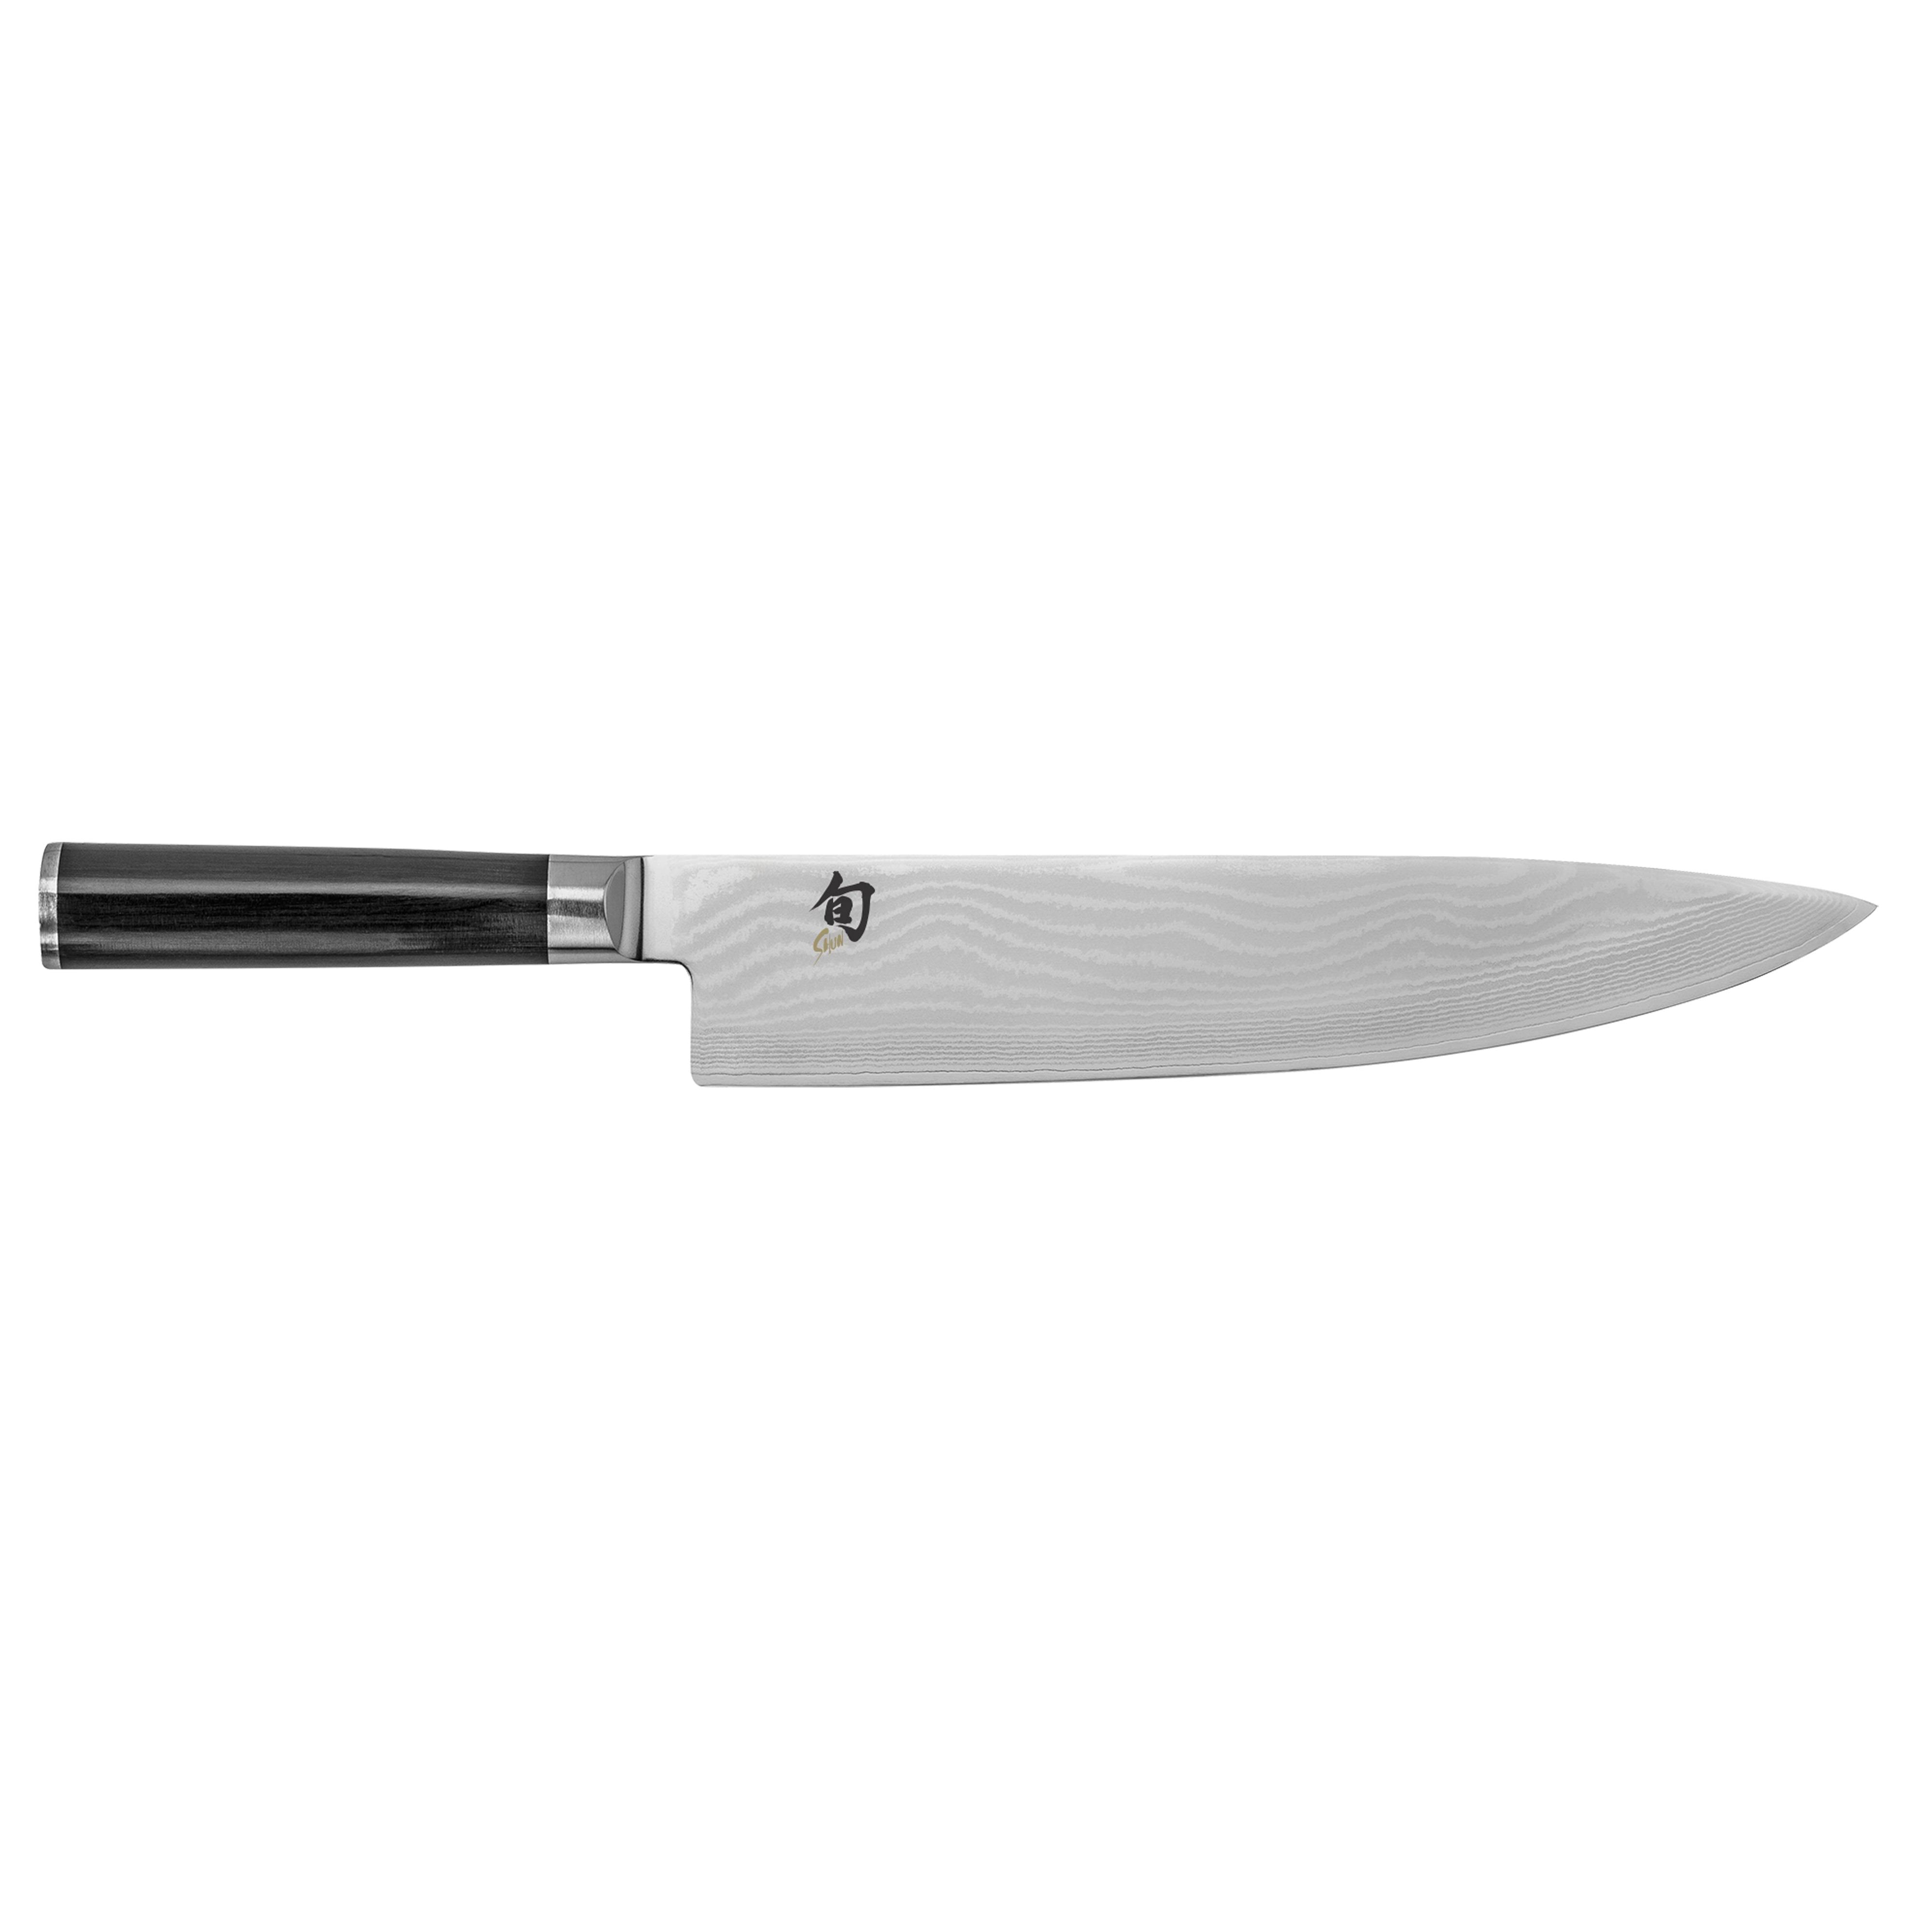 Shun Classic Chef's Knife - 10"